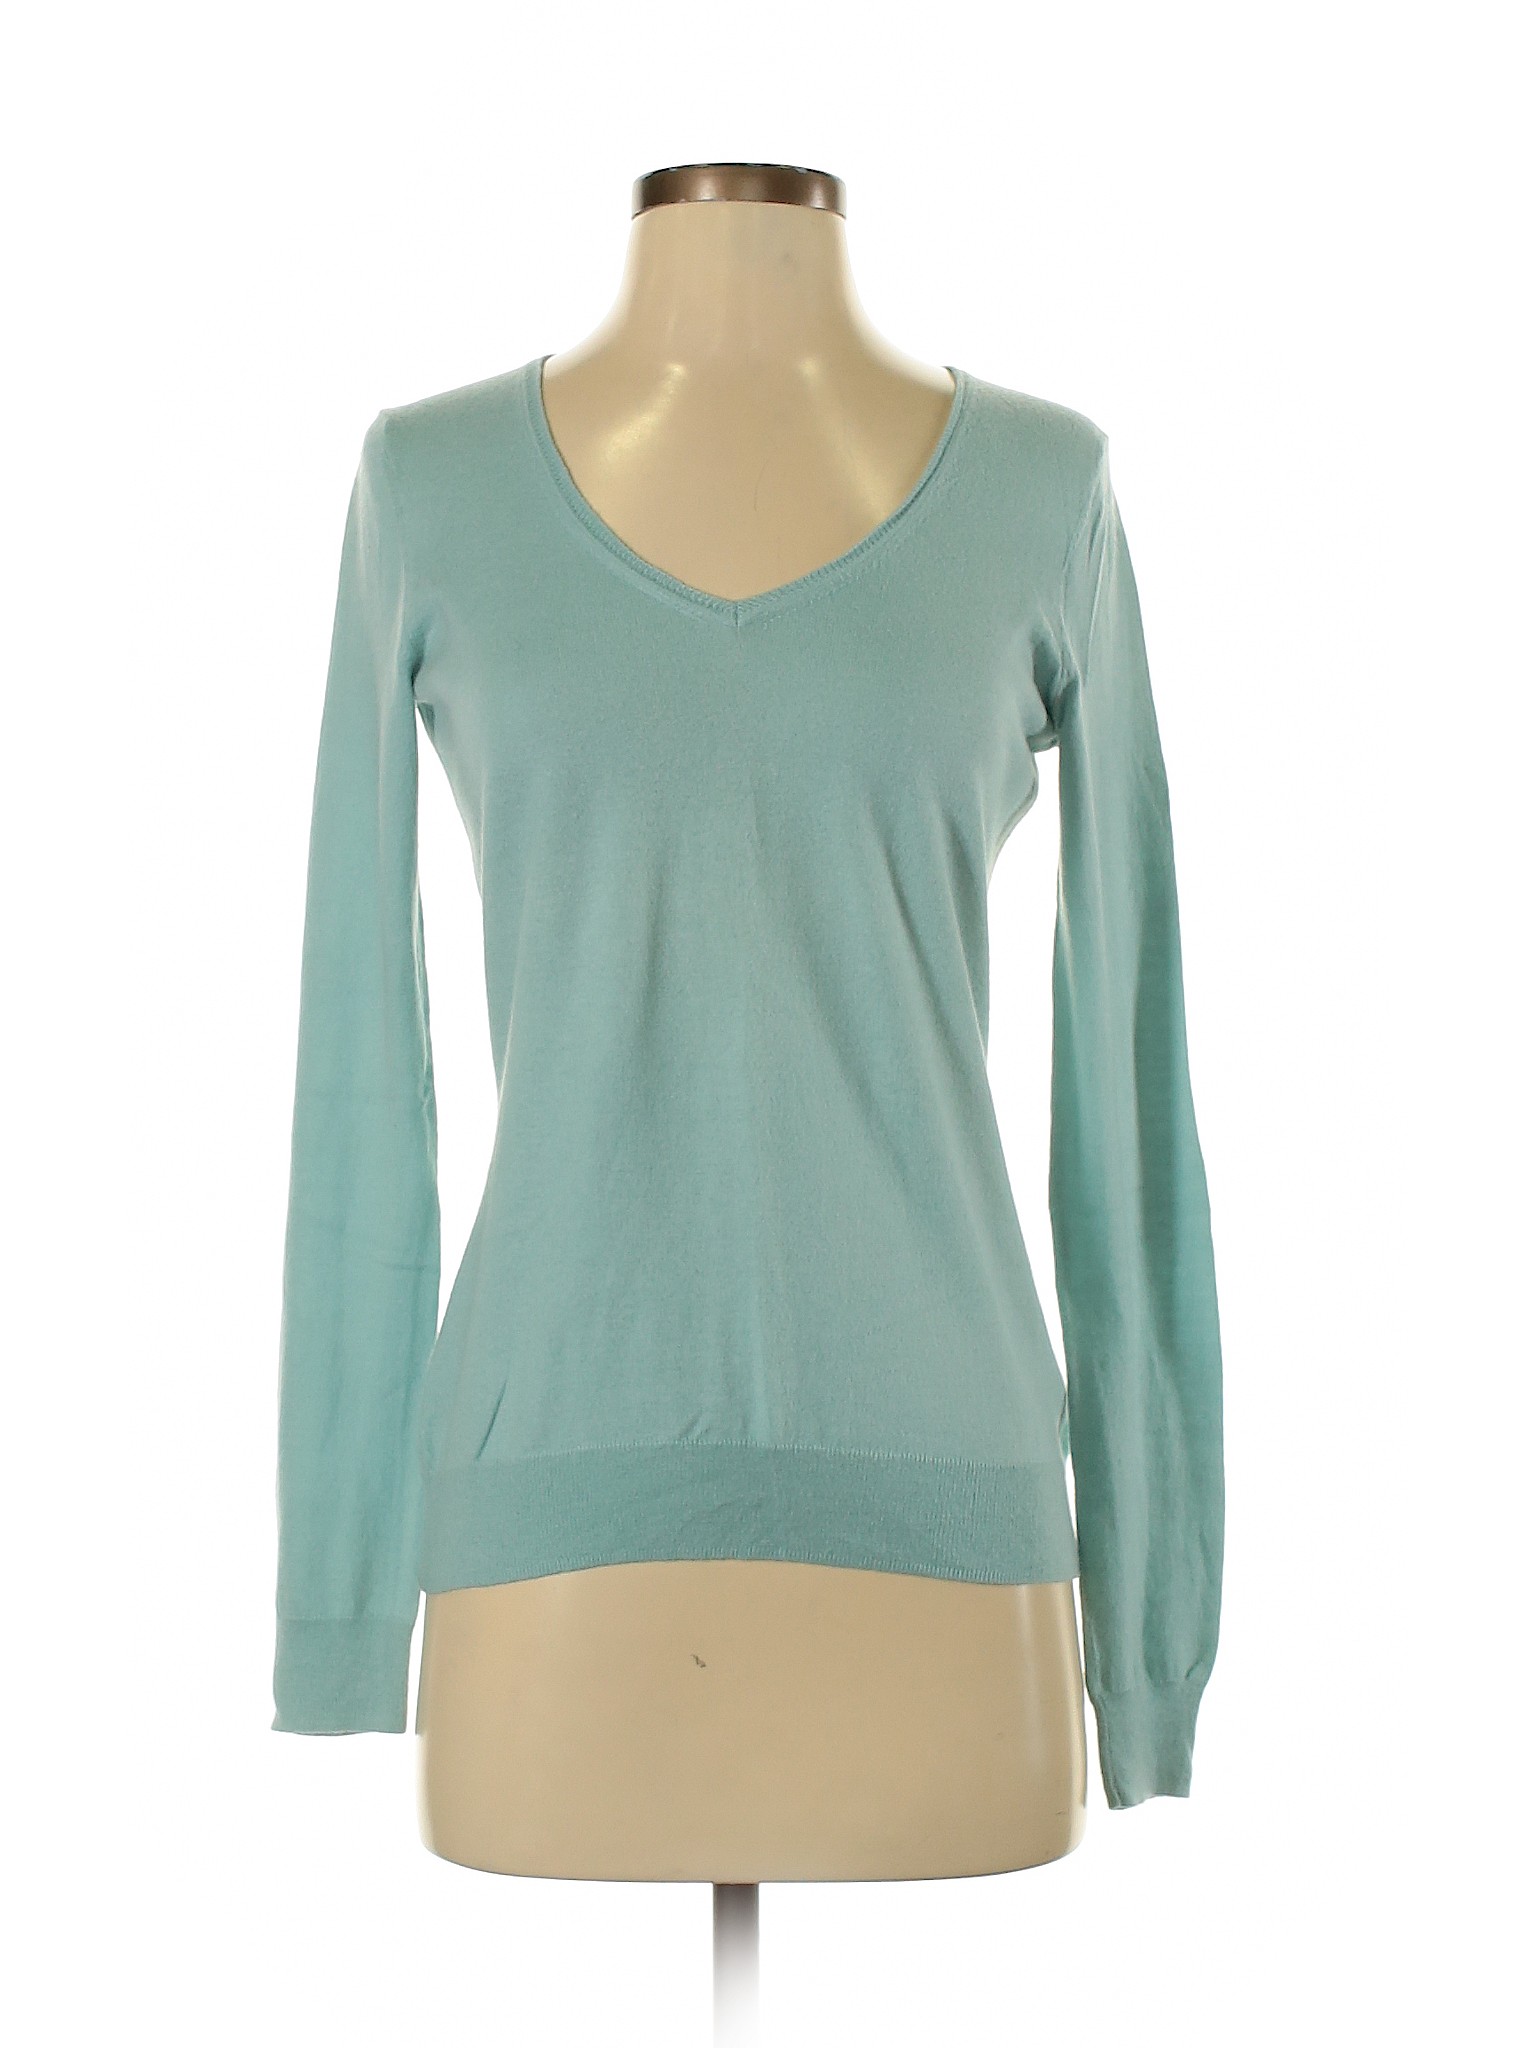 Talbots Women Green Pullover Sweater XS | eBay